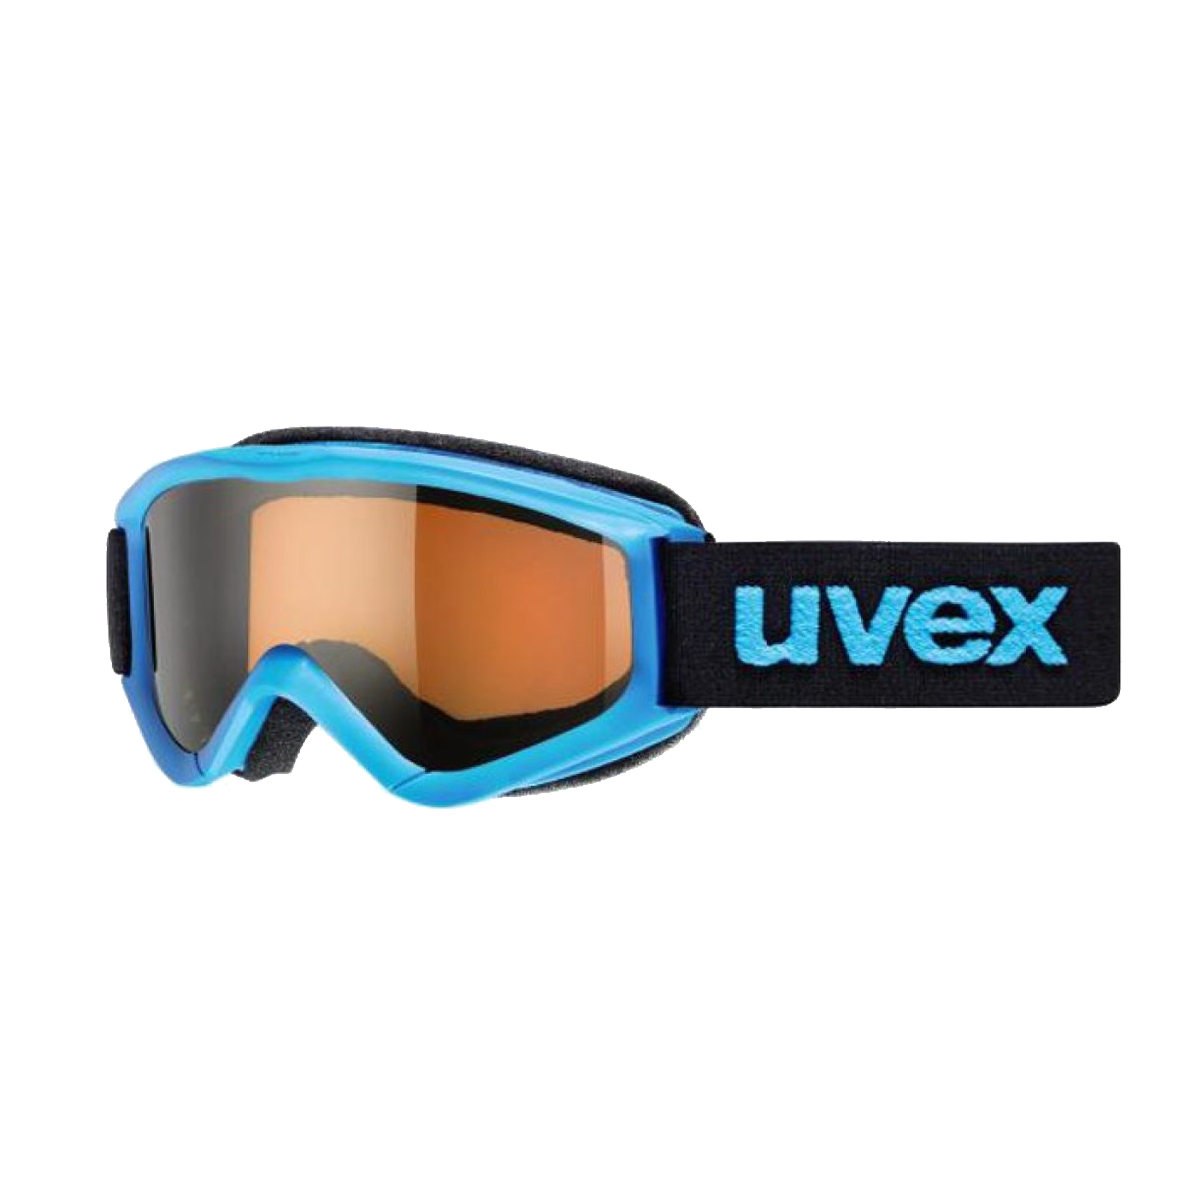 uvex speedy pro blue sl/lasergold S2 blue